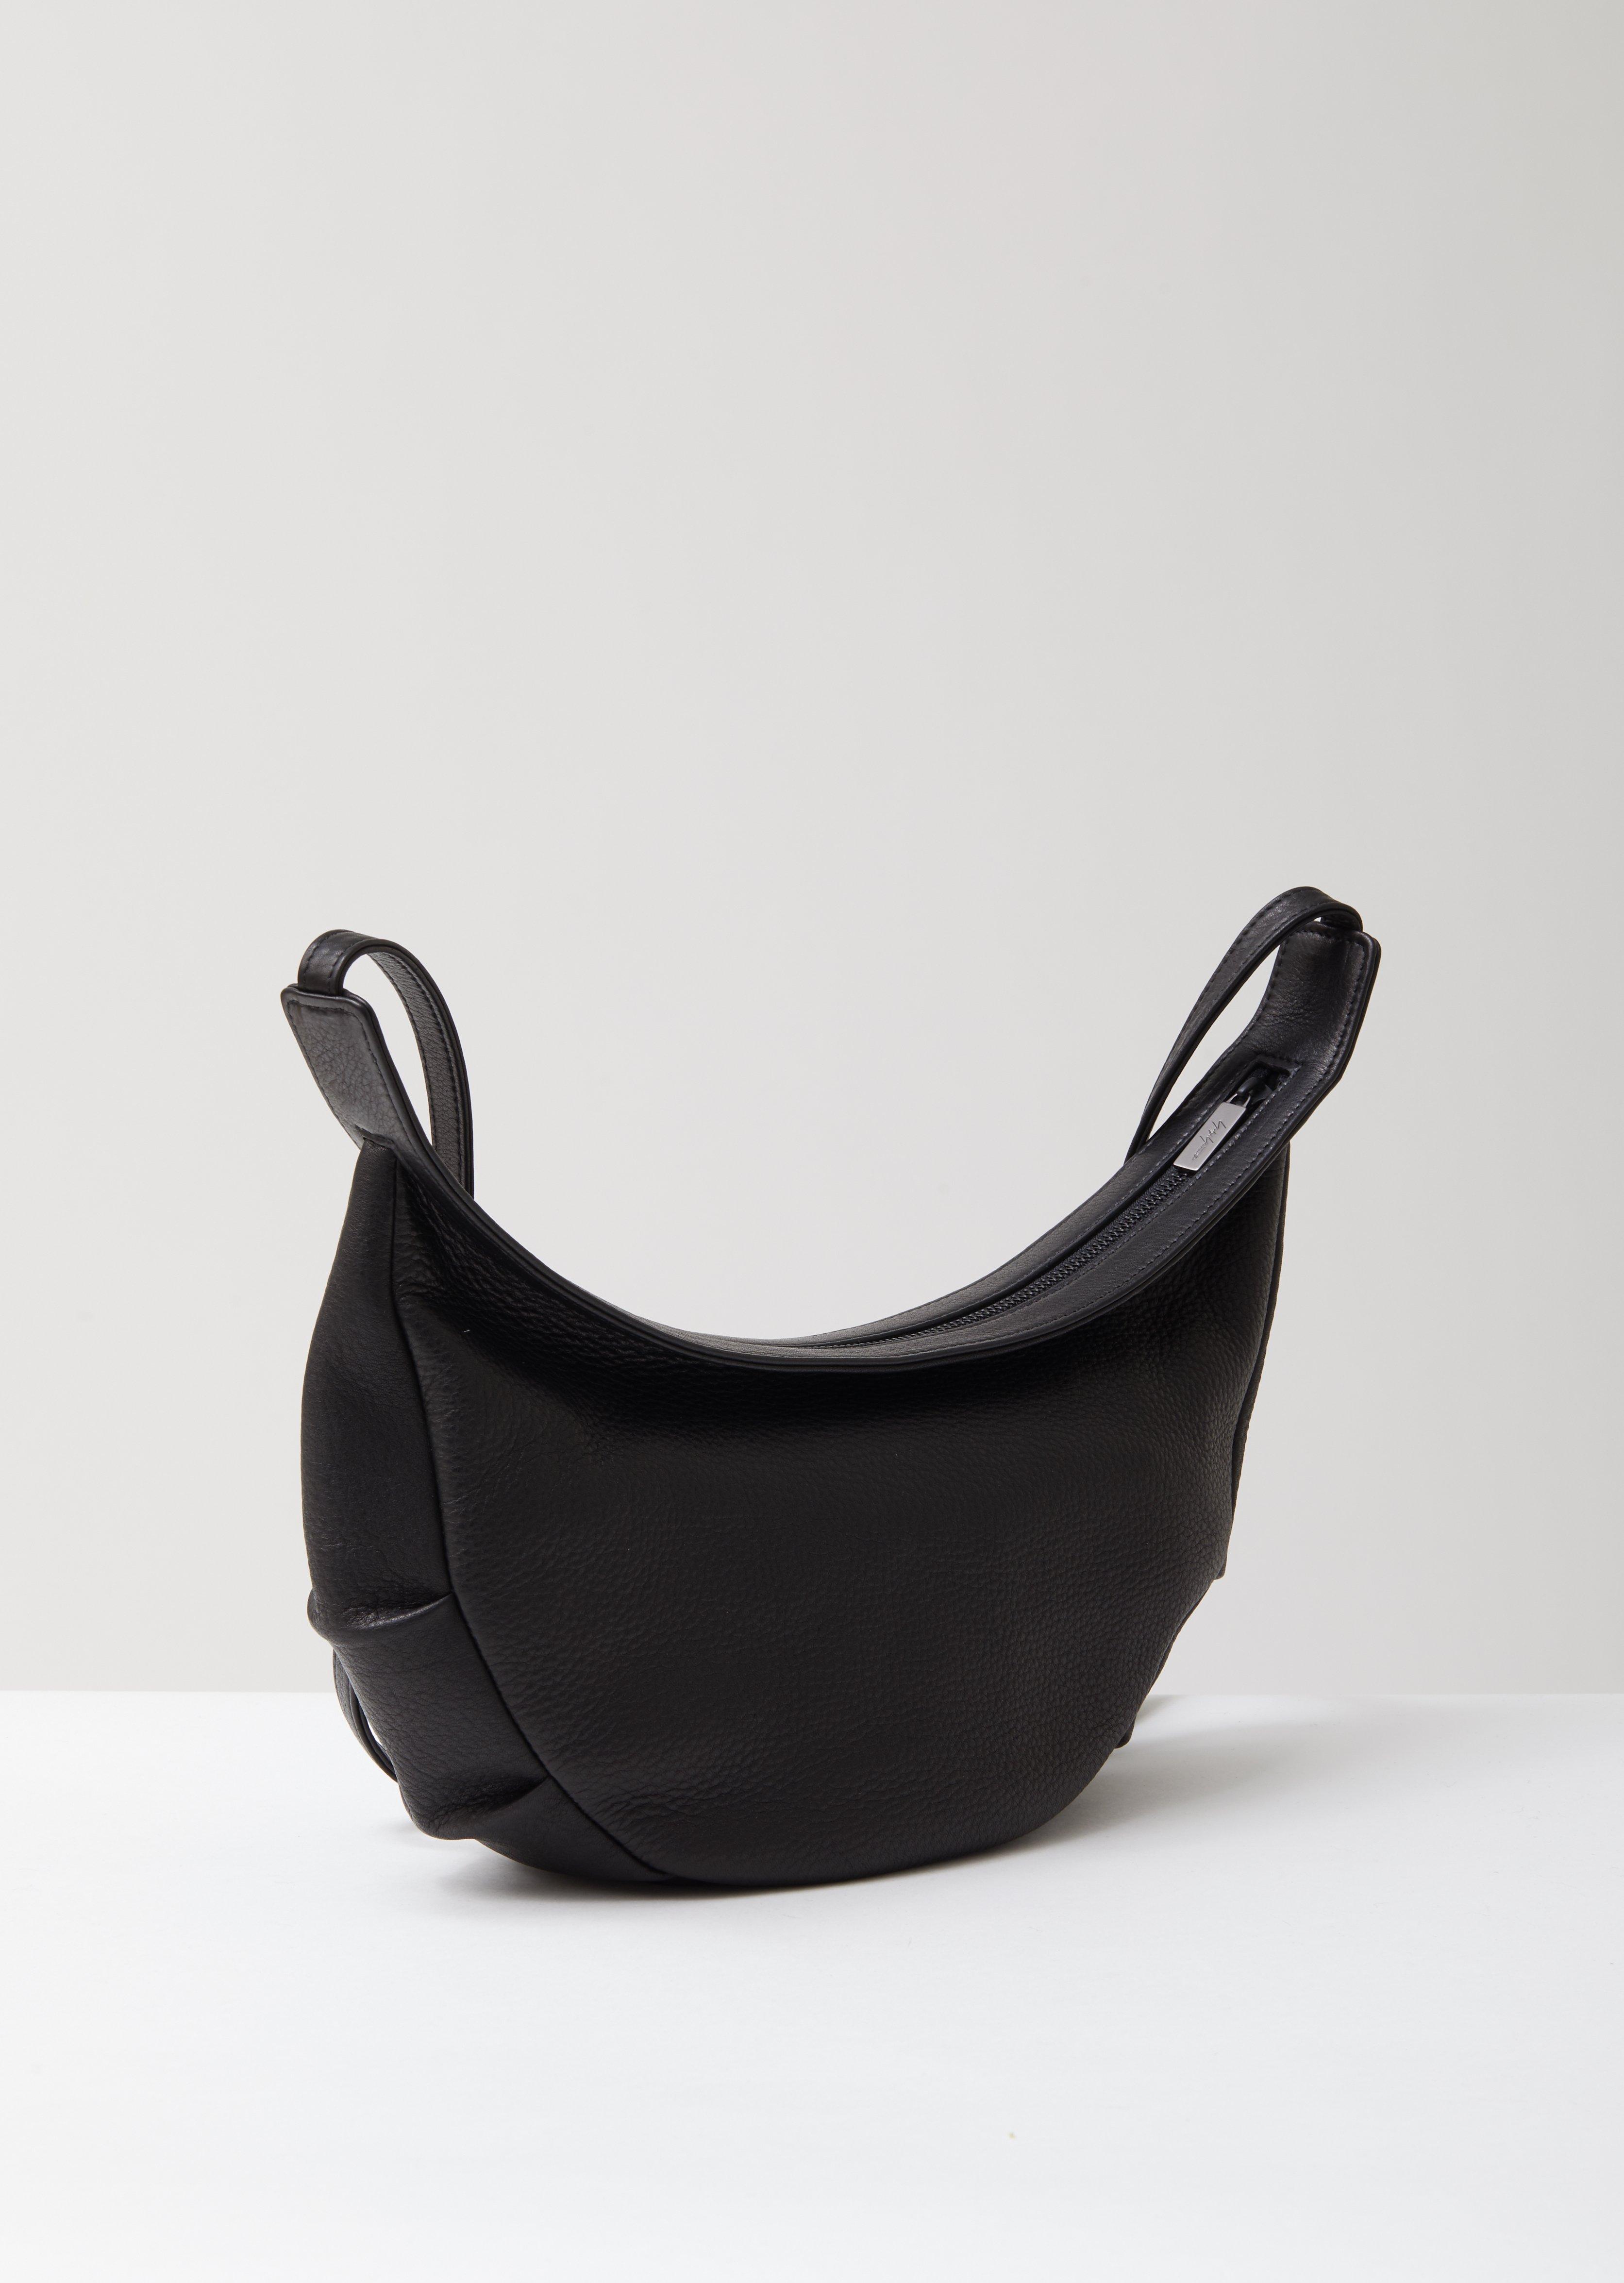 Yohji Yamamoto Leather Crossbody Bag in Black | Lyst